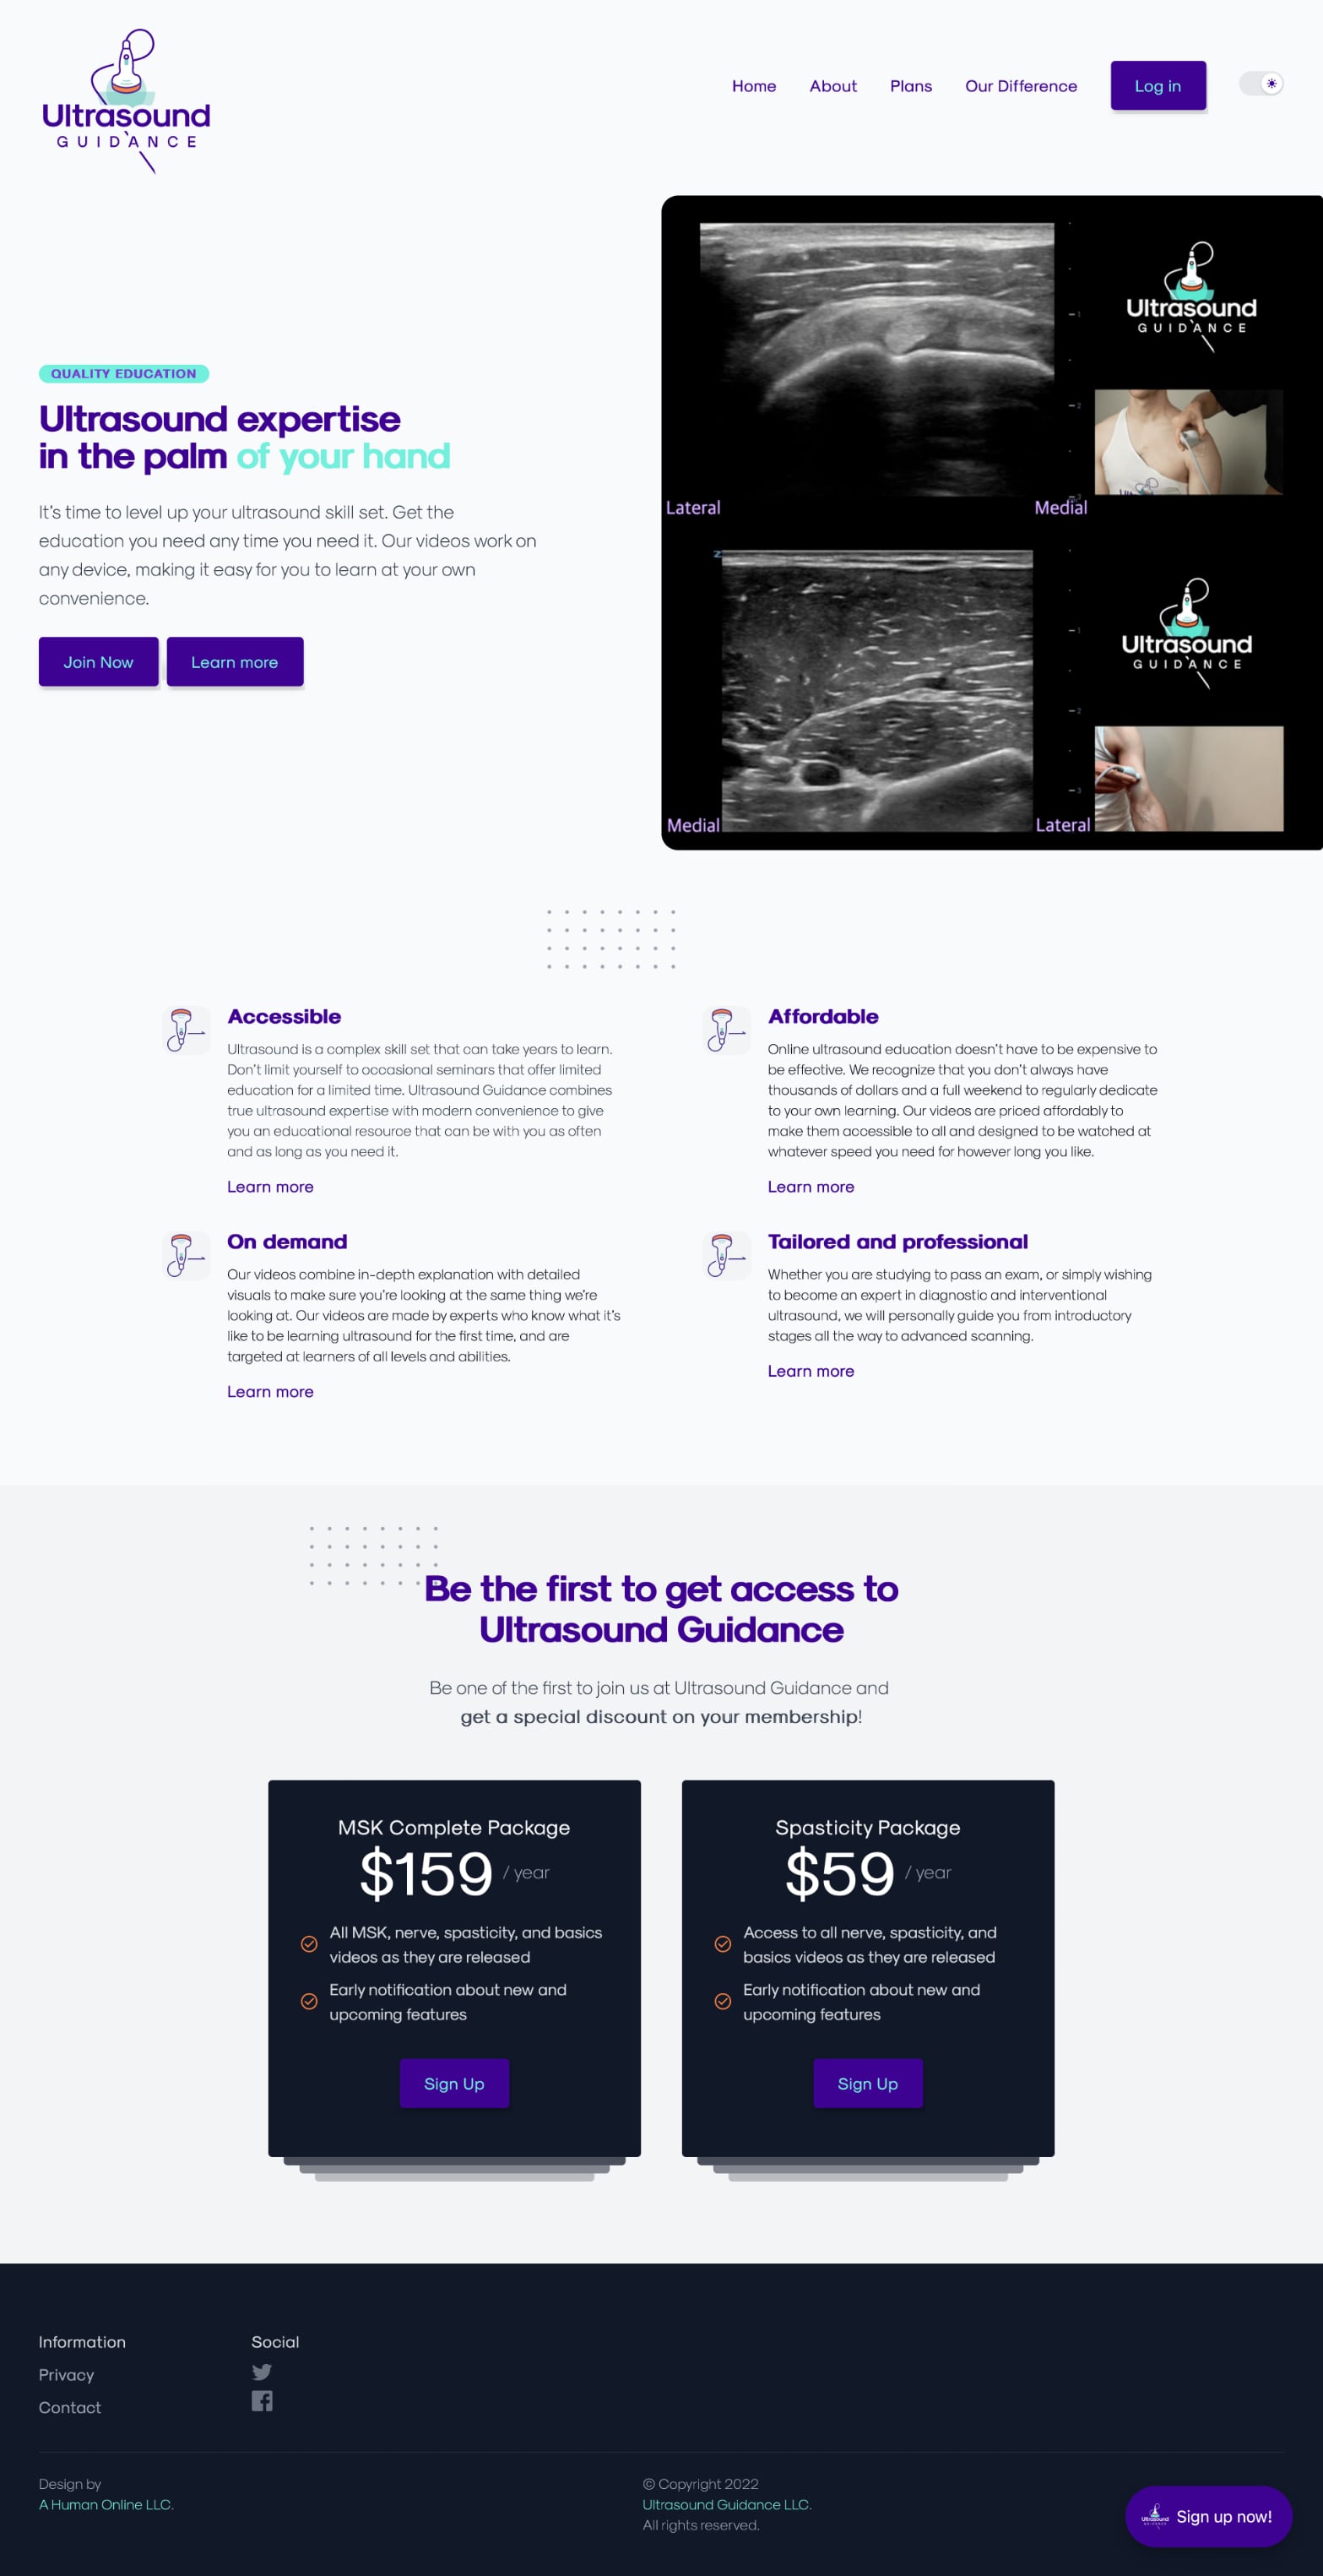 Screenshot of Ultrasound Guidance website showing hero image and description